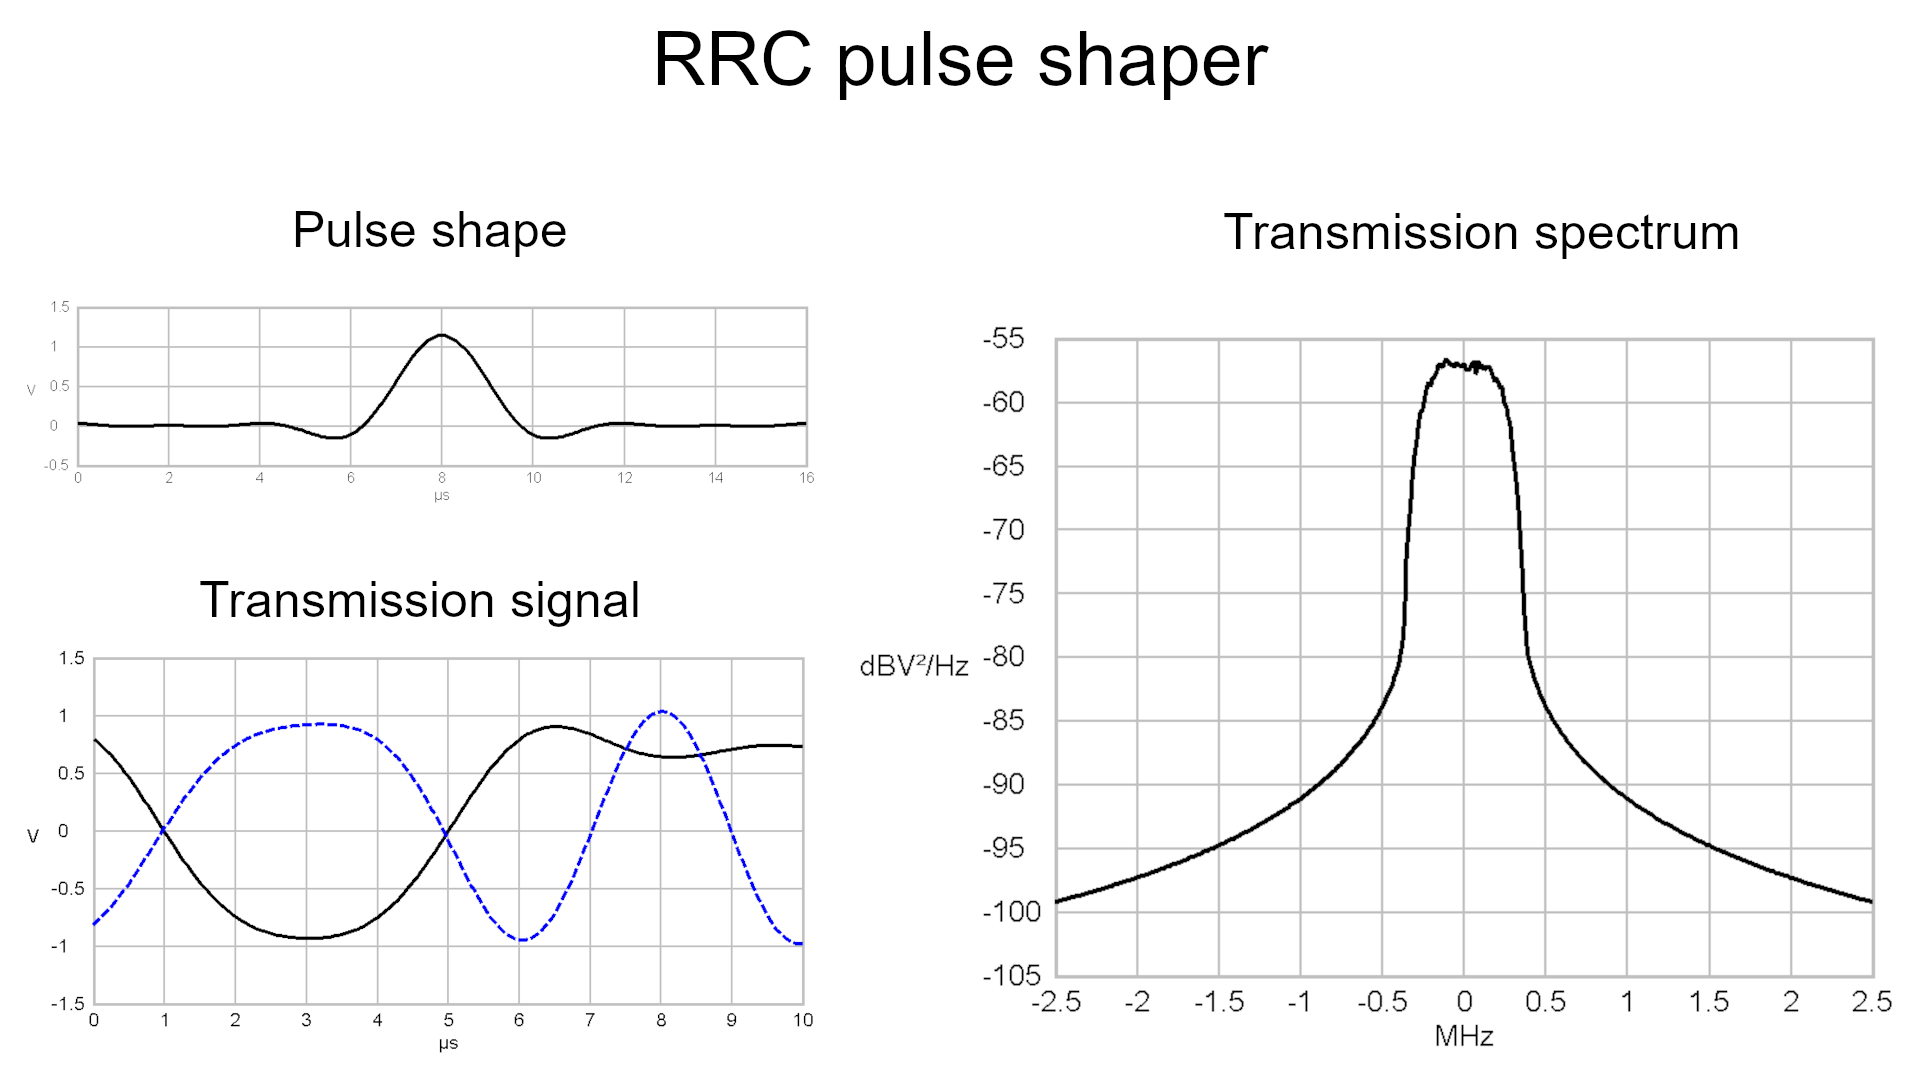 RRC pulseshaping